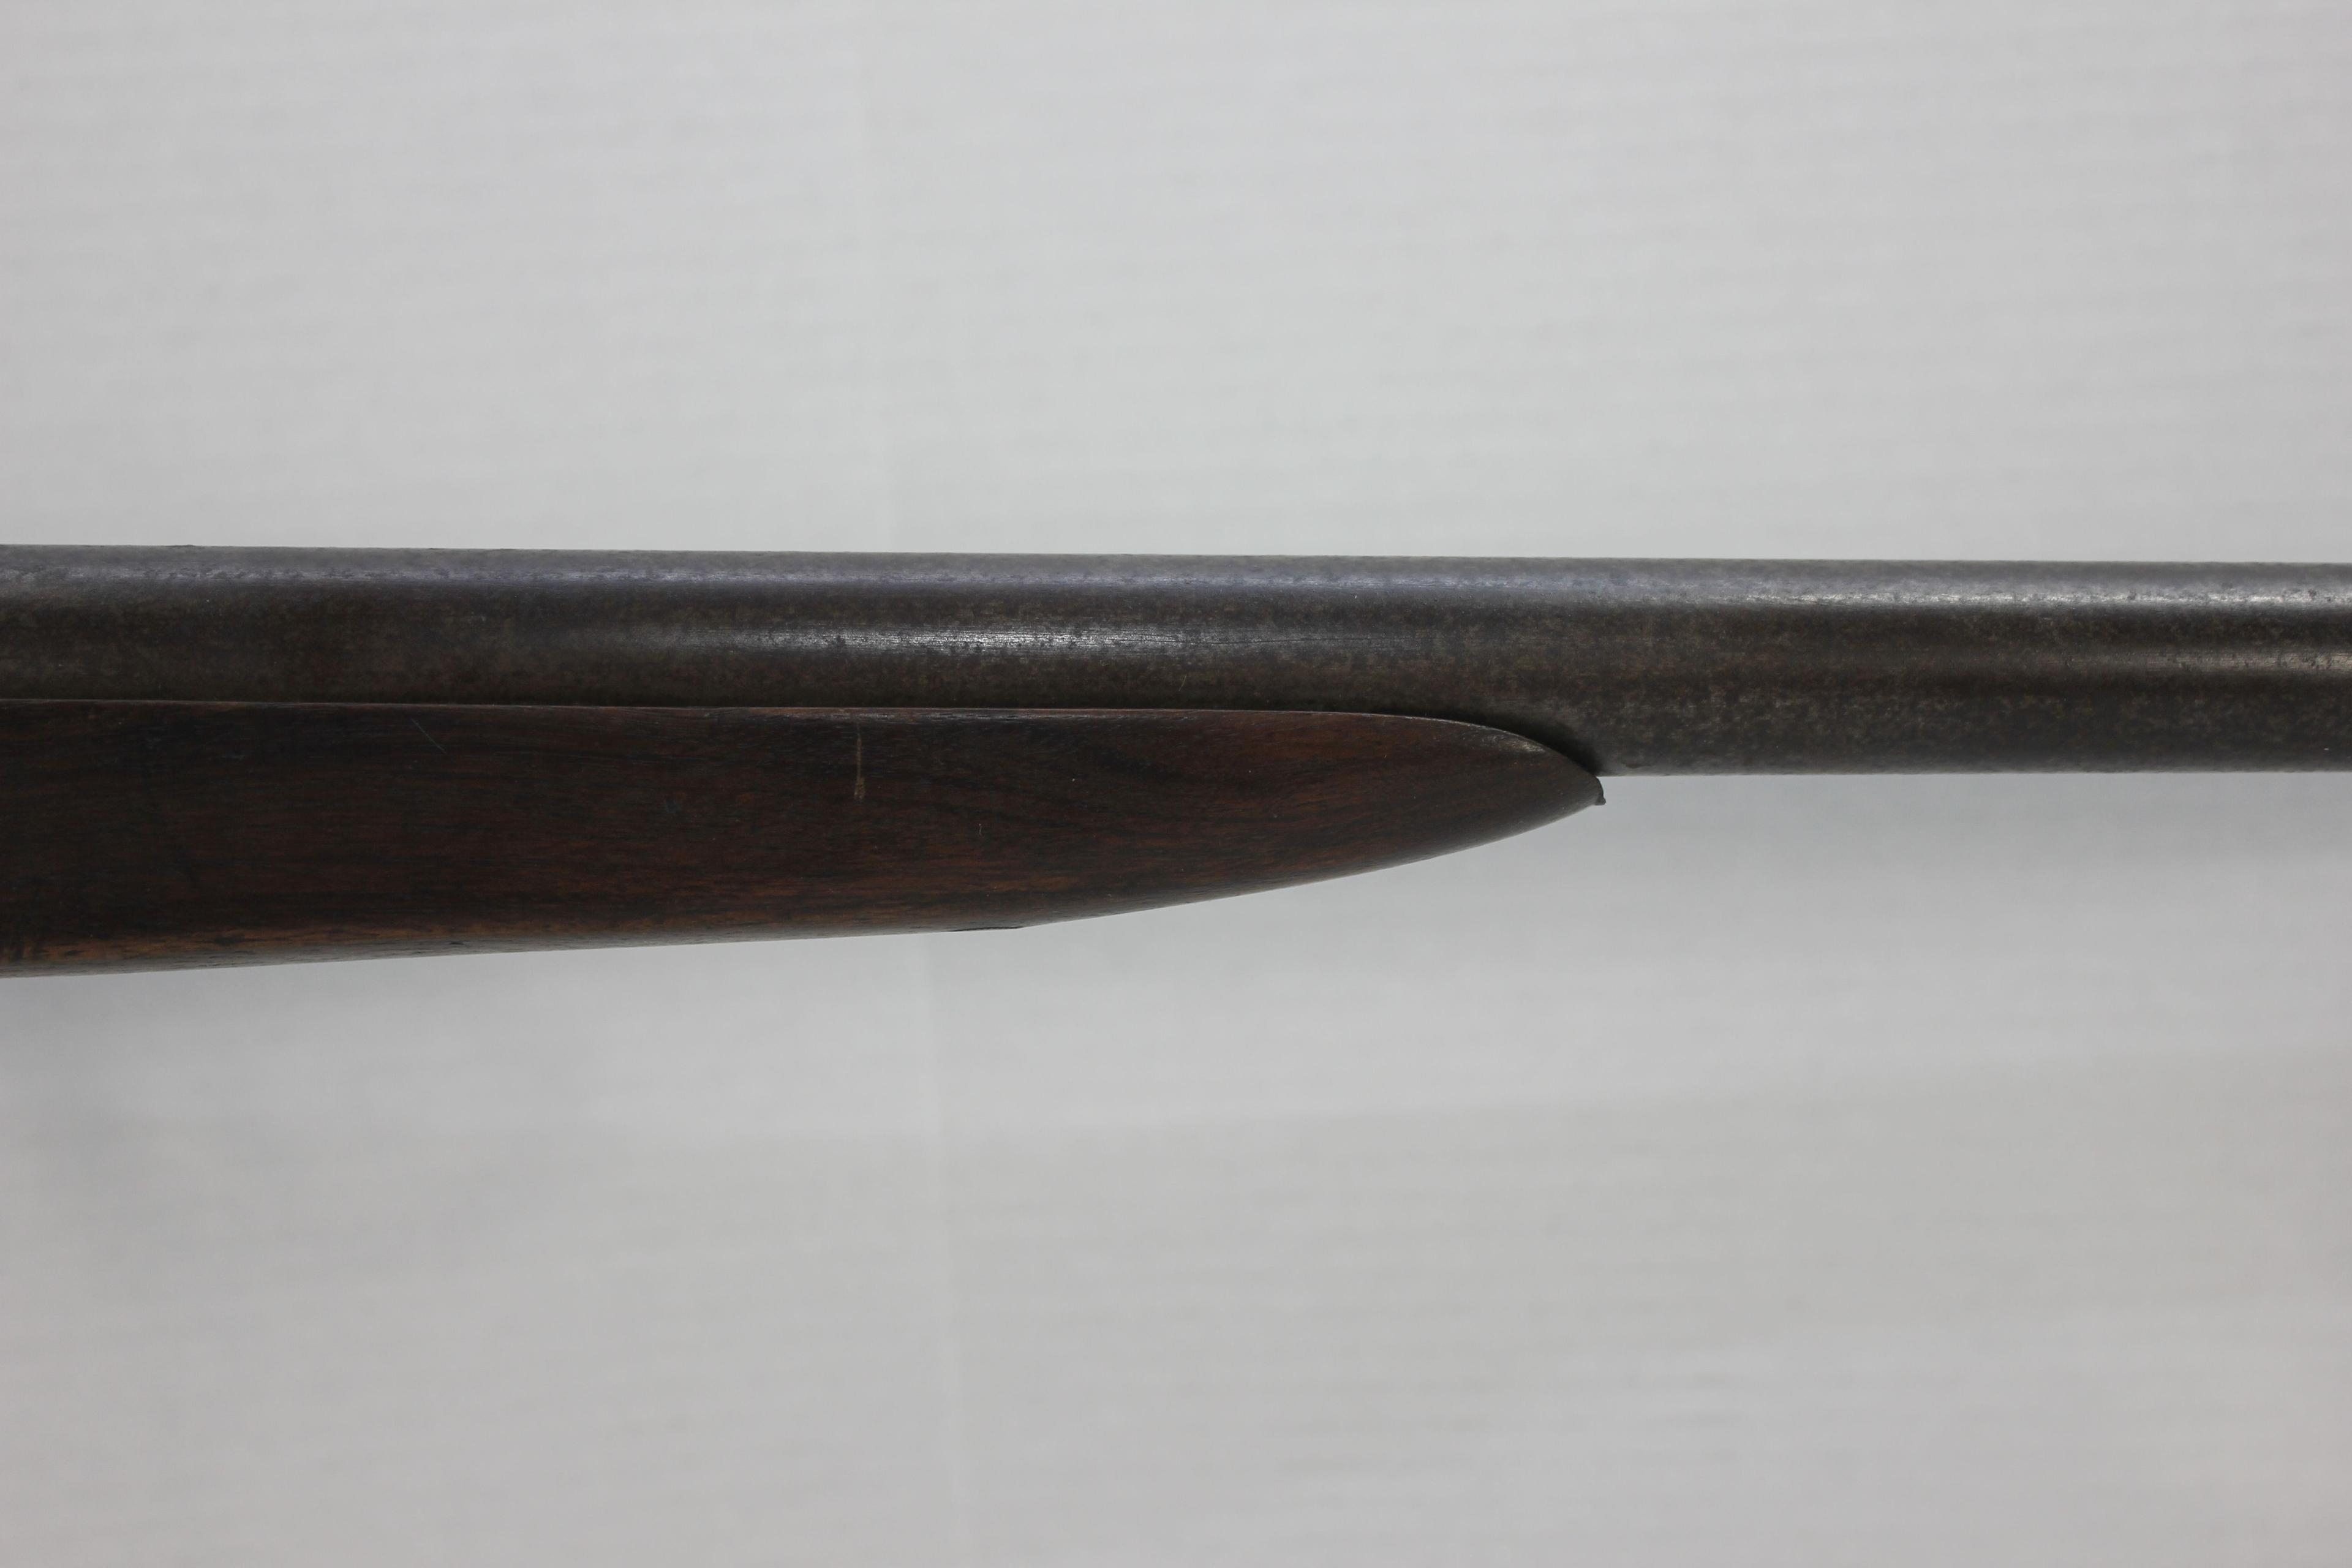 Hopkins & Allen Arms. Co. 12 Ga. Single Shot Break Open Shotgun w/30" BBL; SN E1028